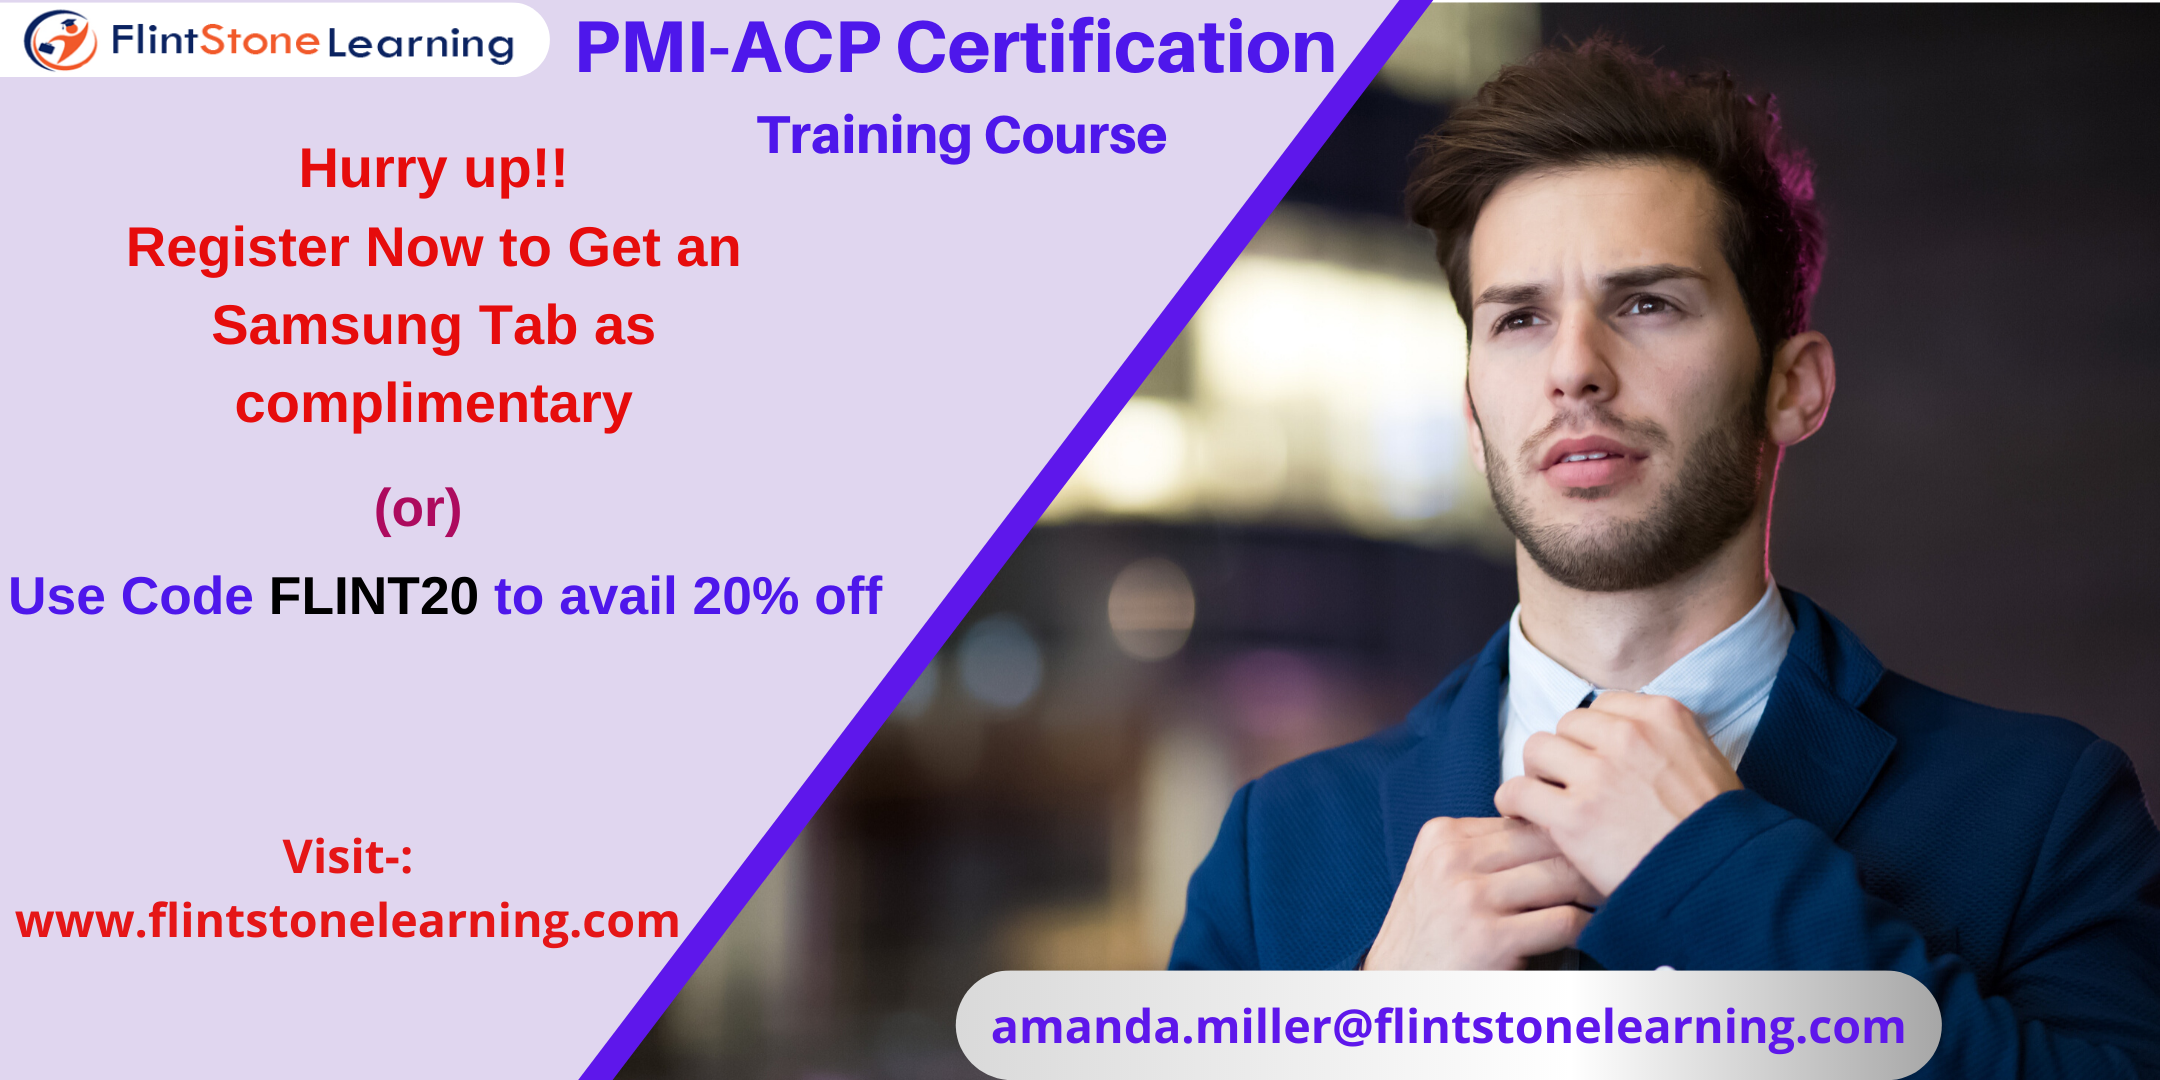 PMI-ACP Certification Training Course in Arlington, MA